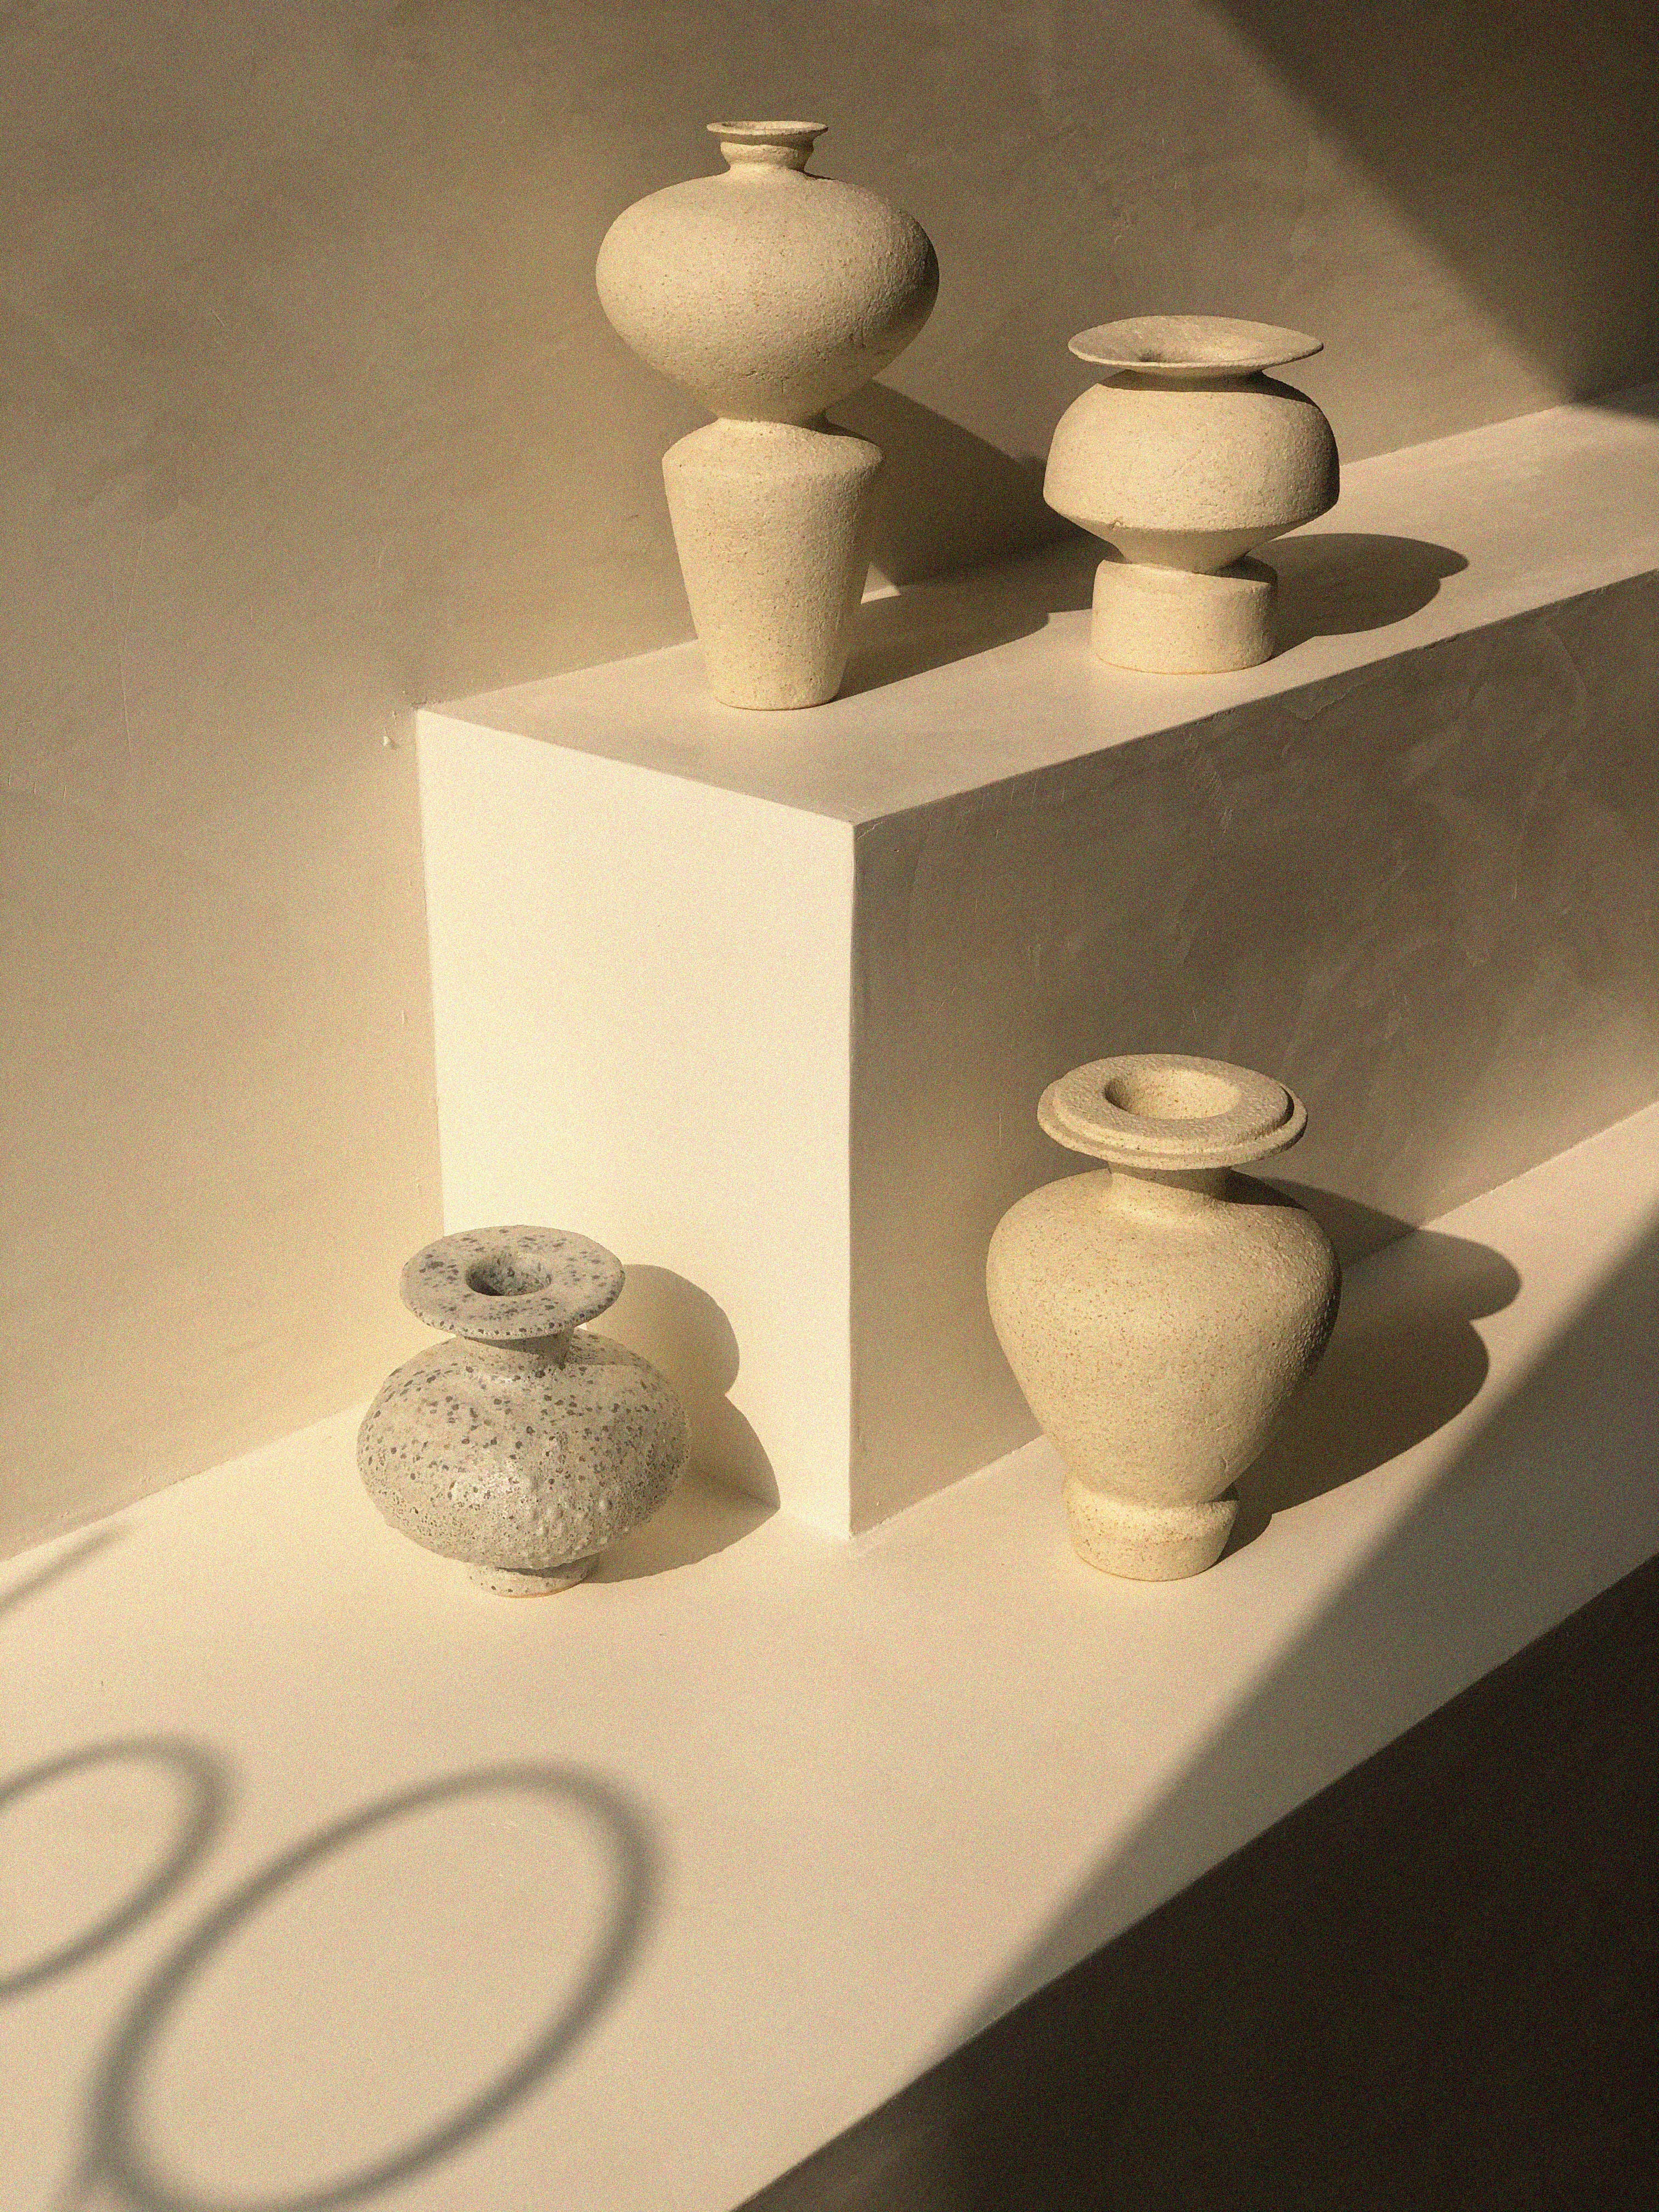 Lebes Ceramic Vase by Canoa